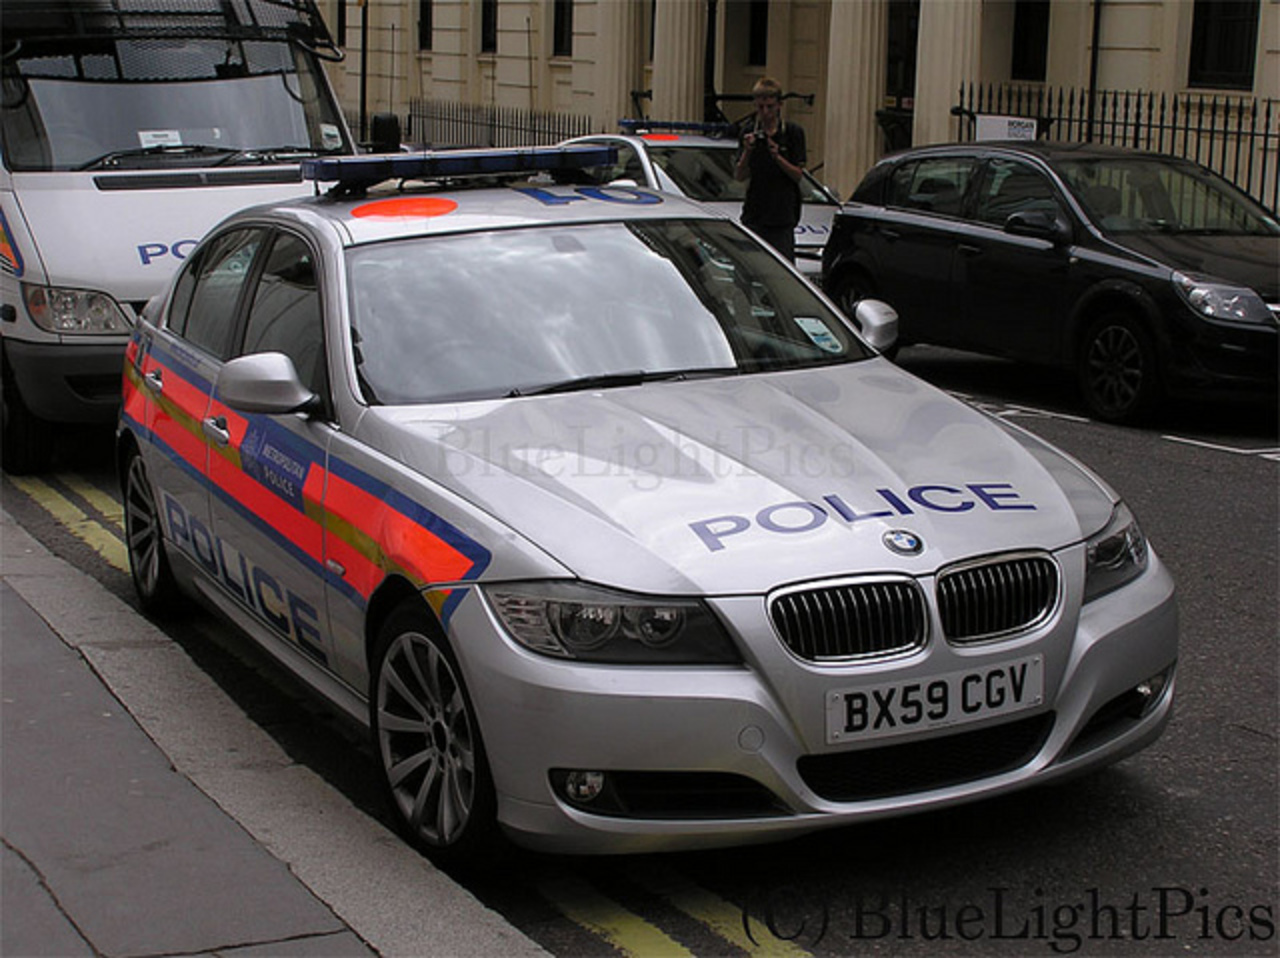 Metropolitan Police - BMW 325D Saloon Area Car | Flickr - Photo ...